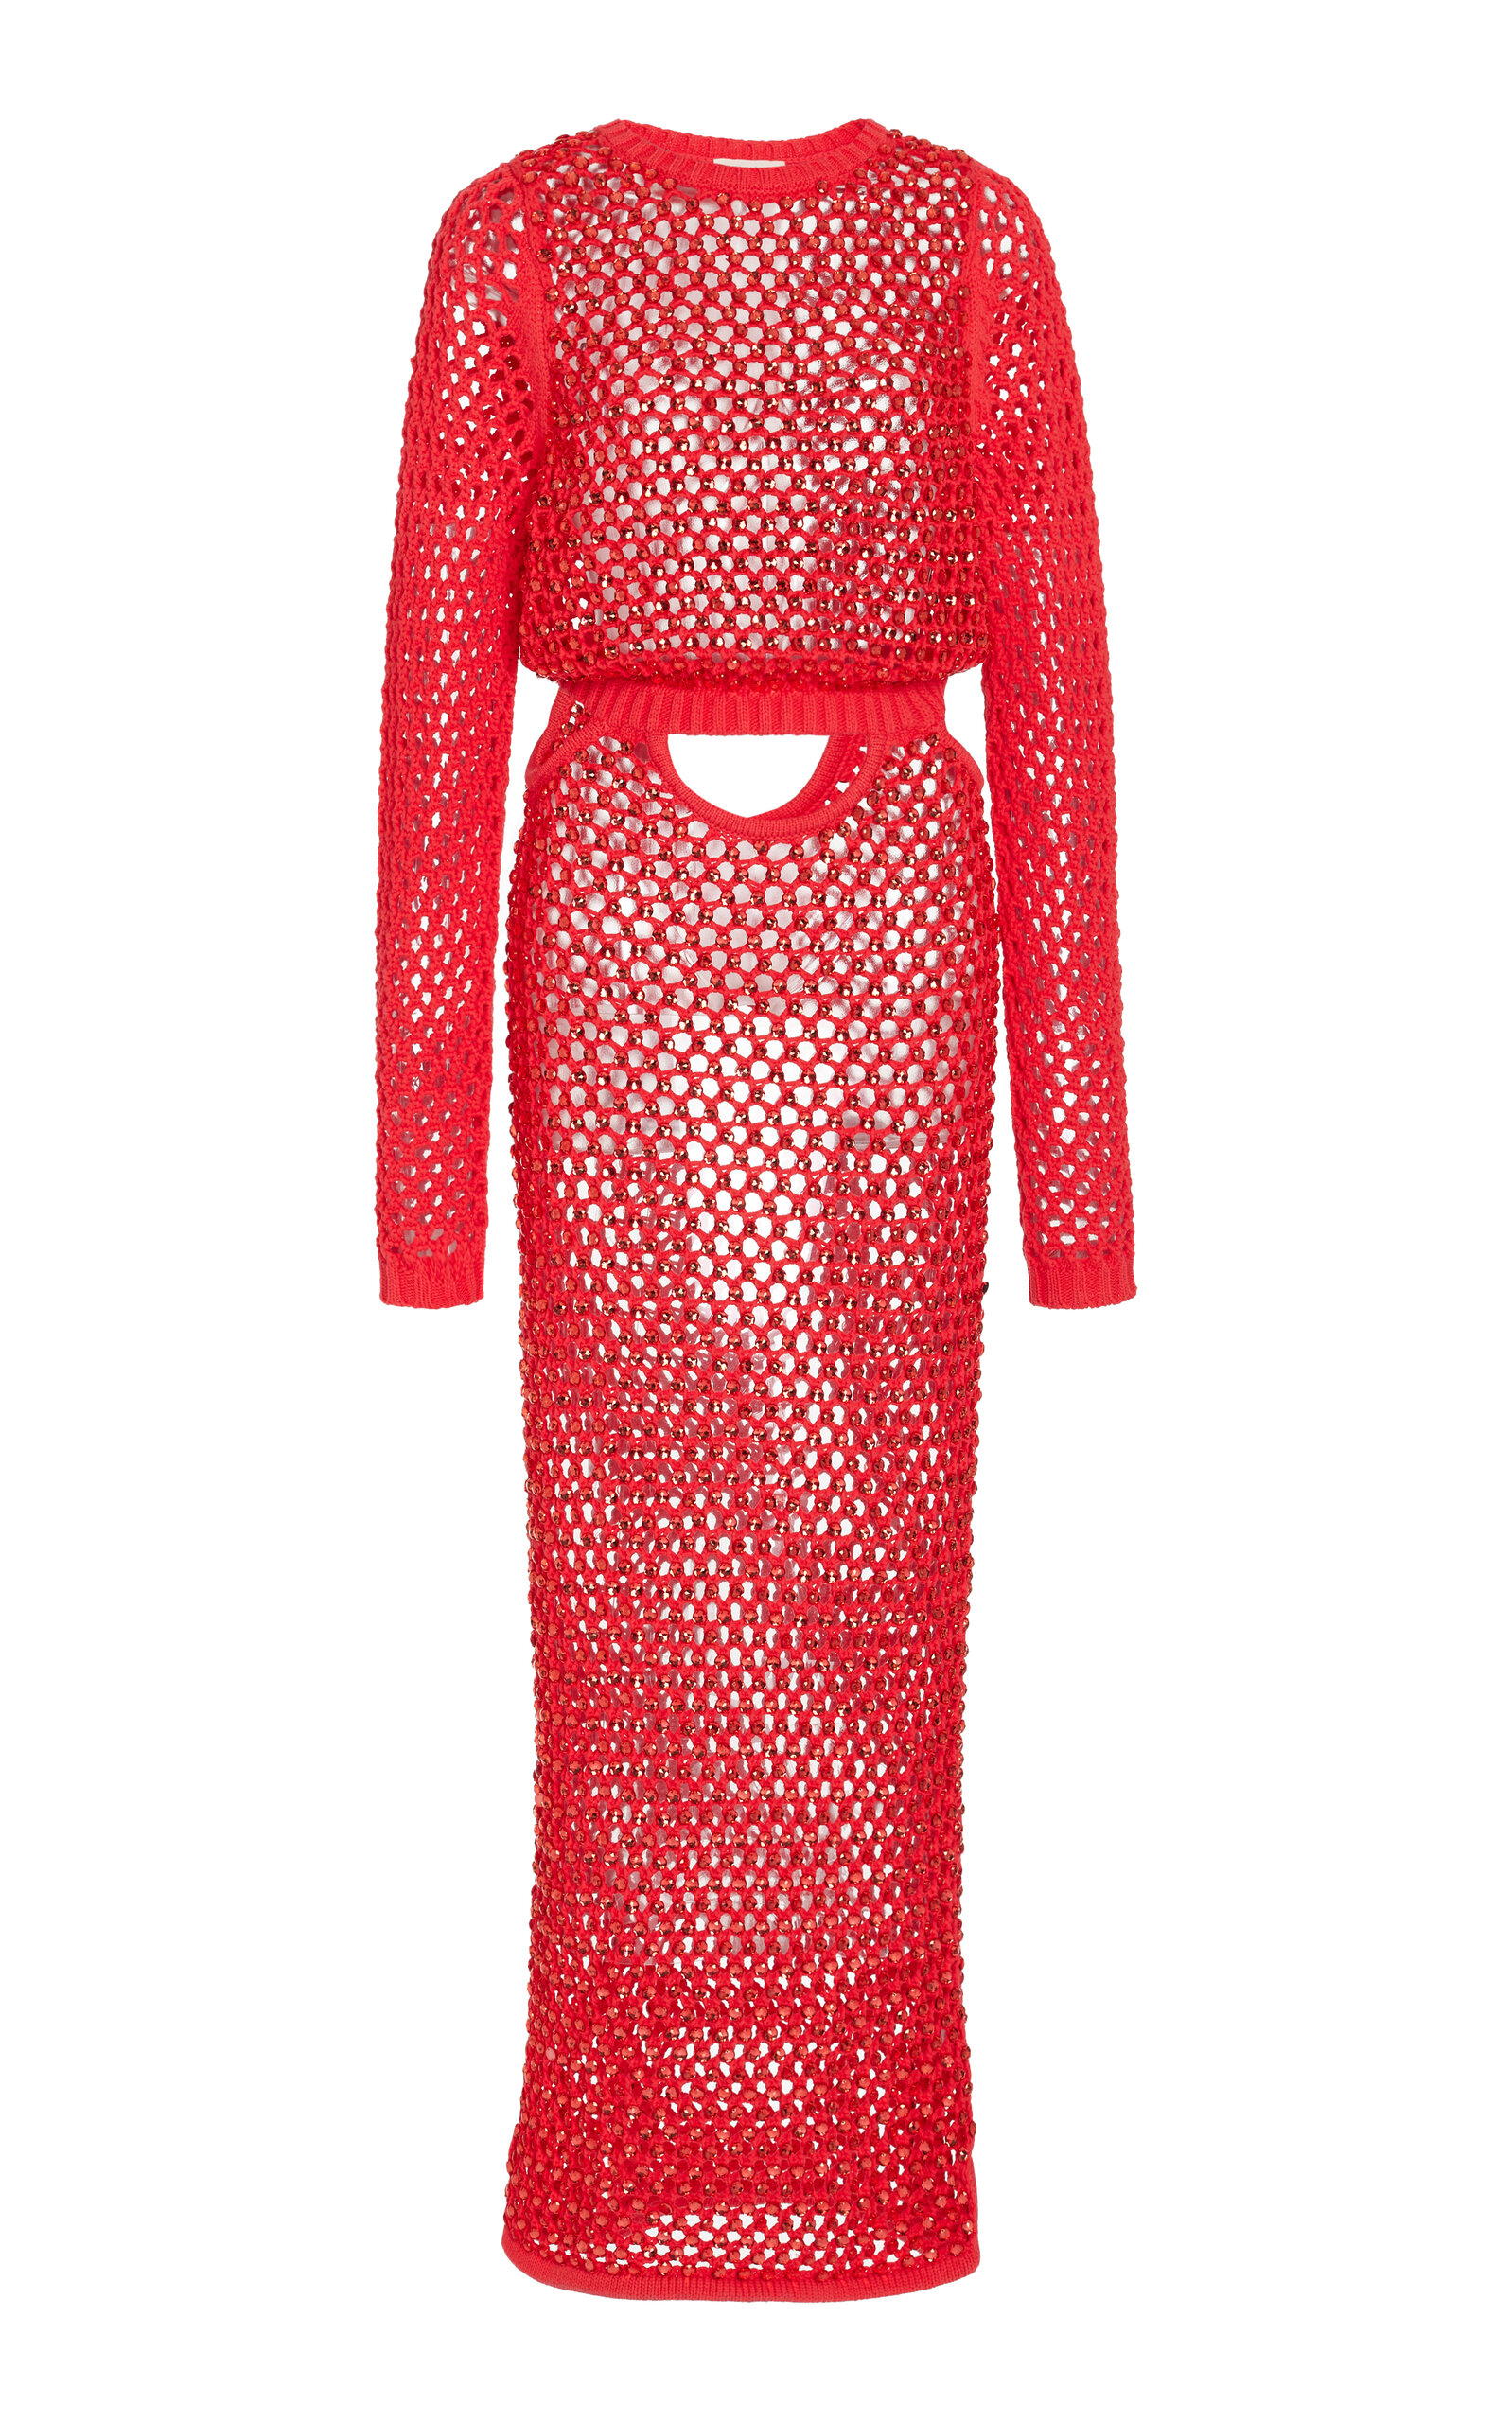 Diotima Women's Sade Crystal Embellised Cotton-blend Knit Dress In Red